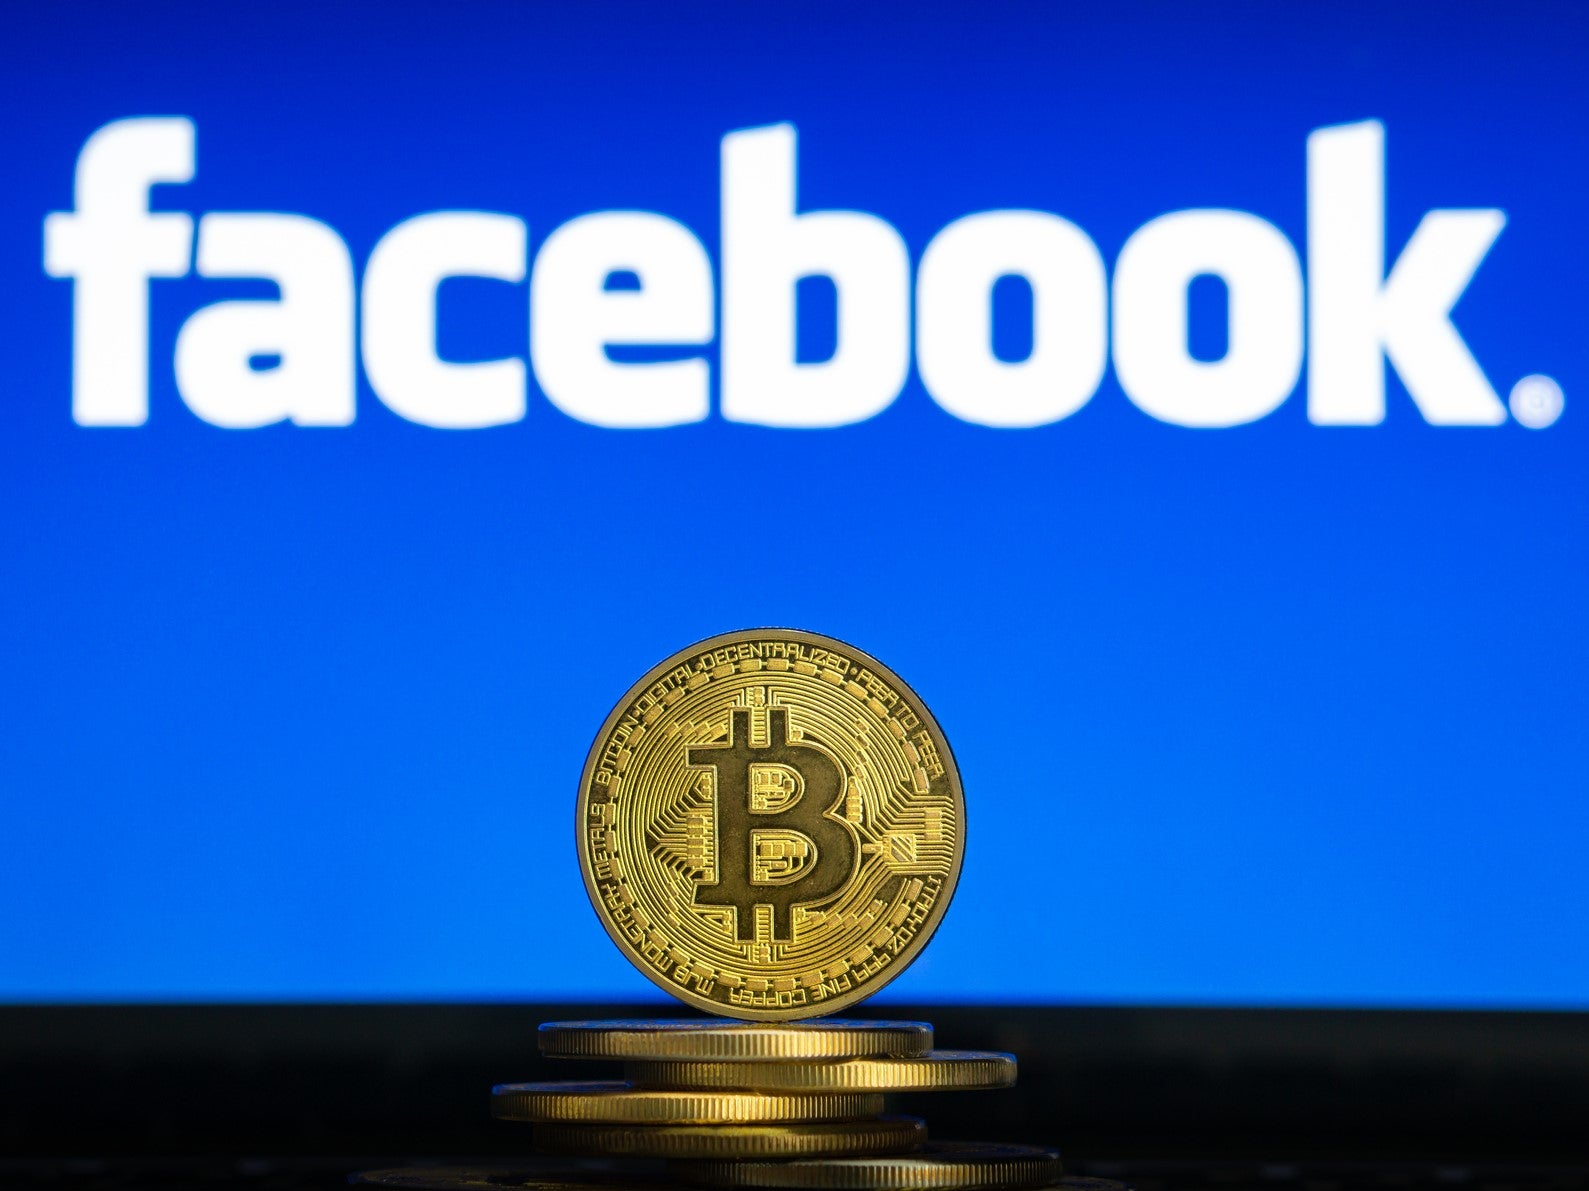 Bitcoin’s market cap surpassed Facebook’s value on 5 October, 2021